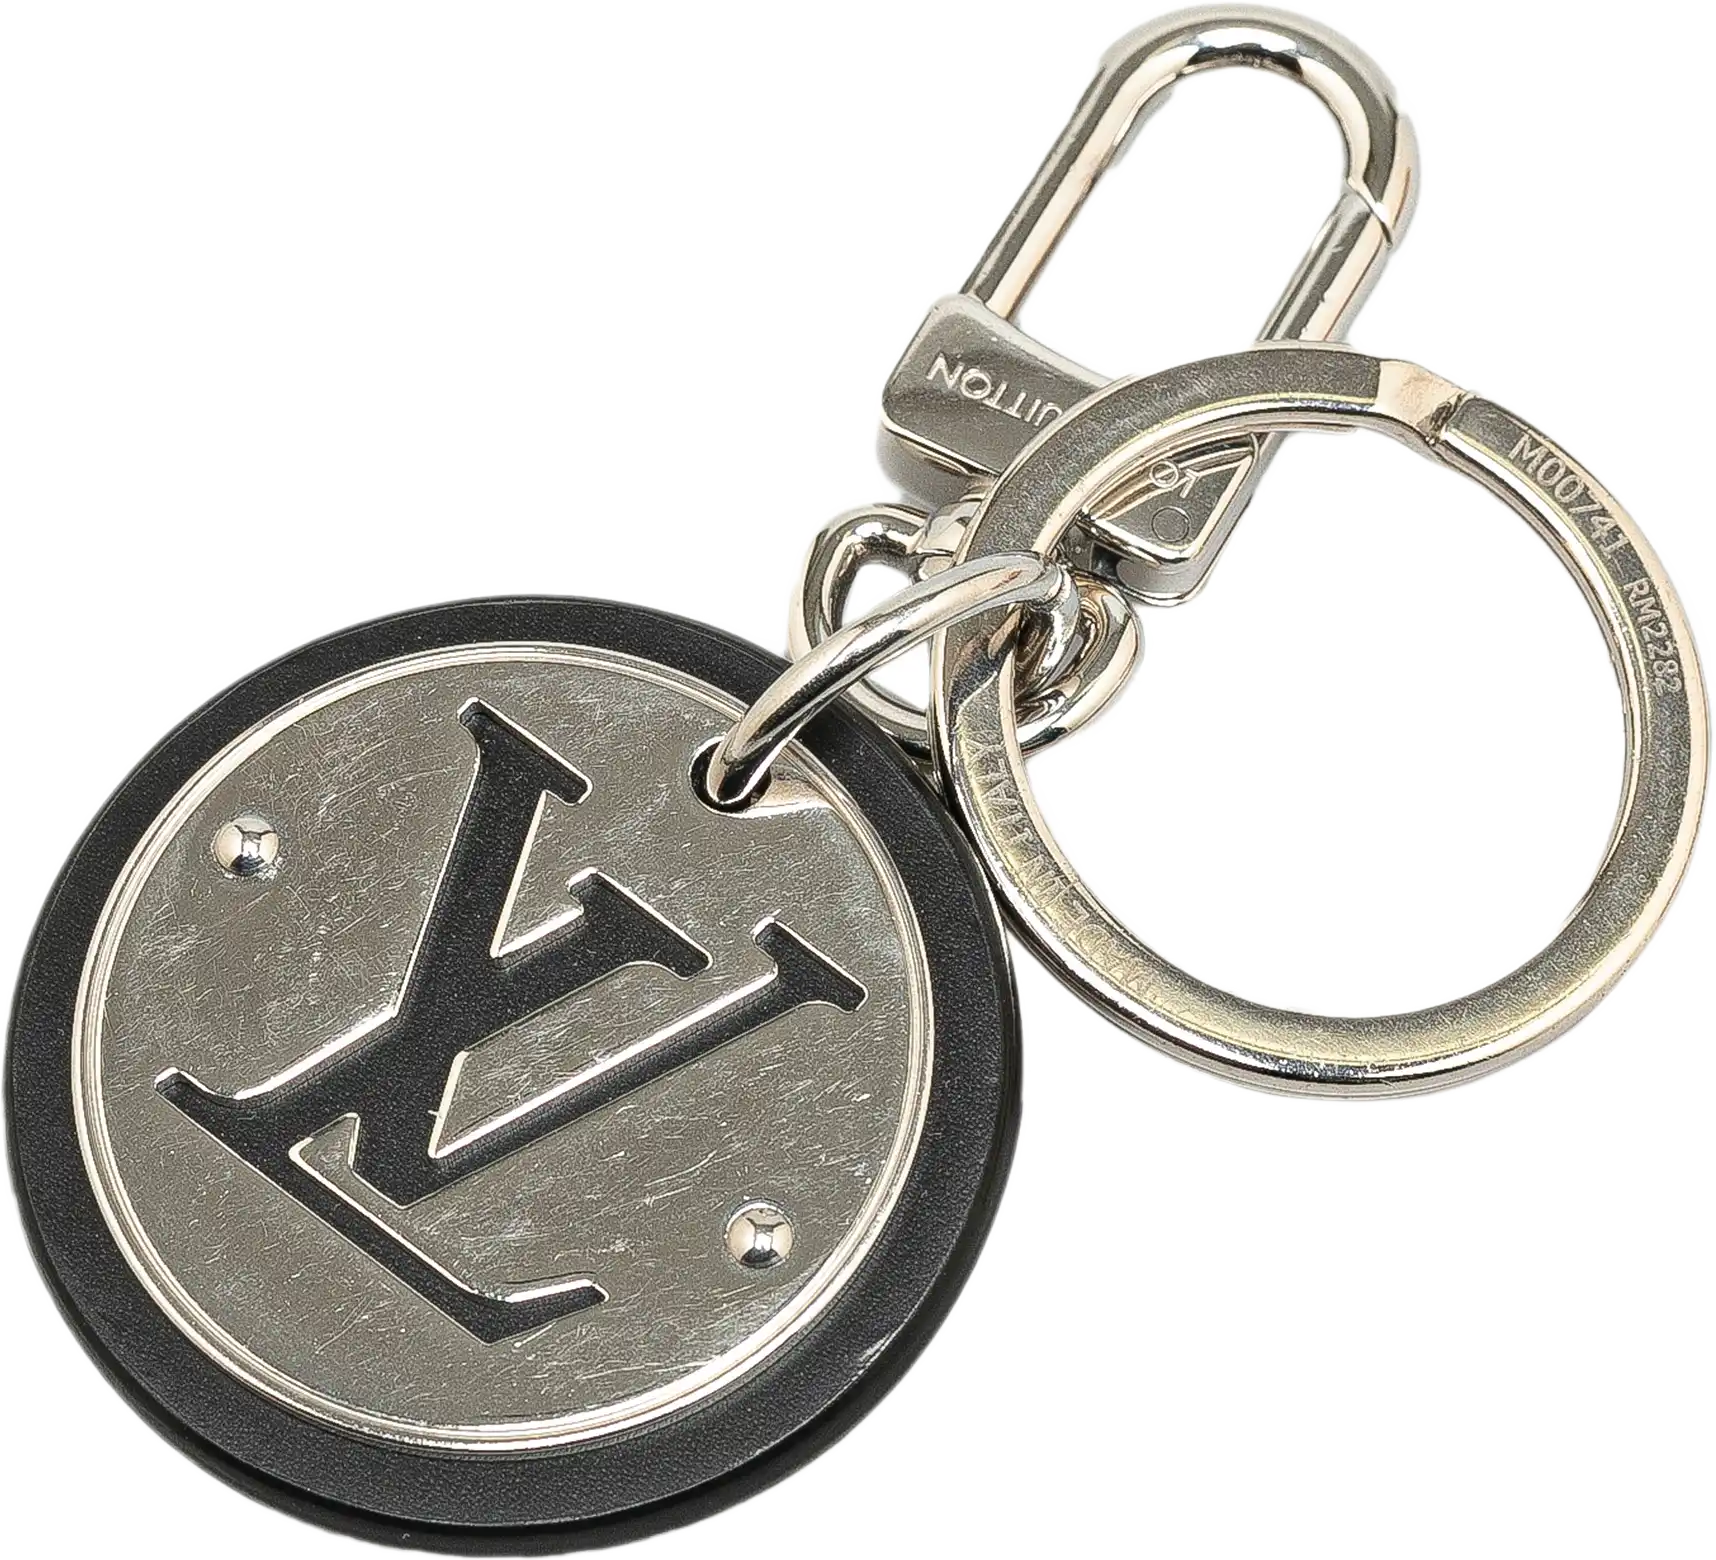 Louis Vuitton Lv Circle Bag Charm And Key Holder